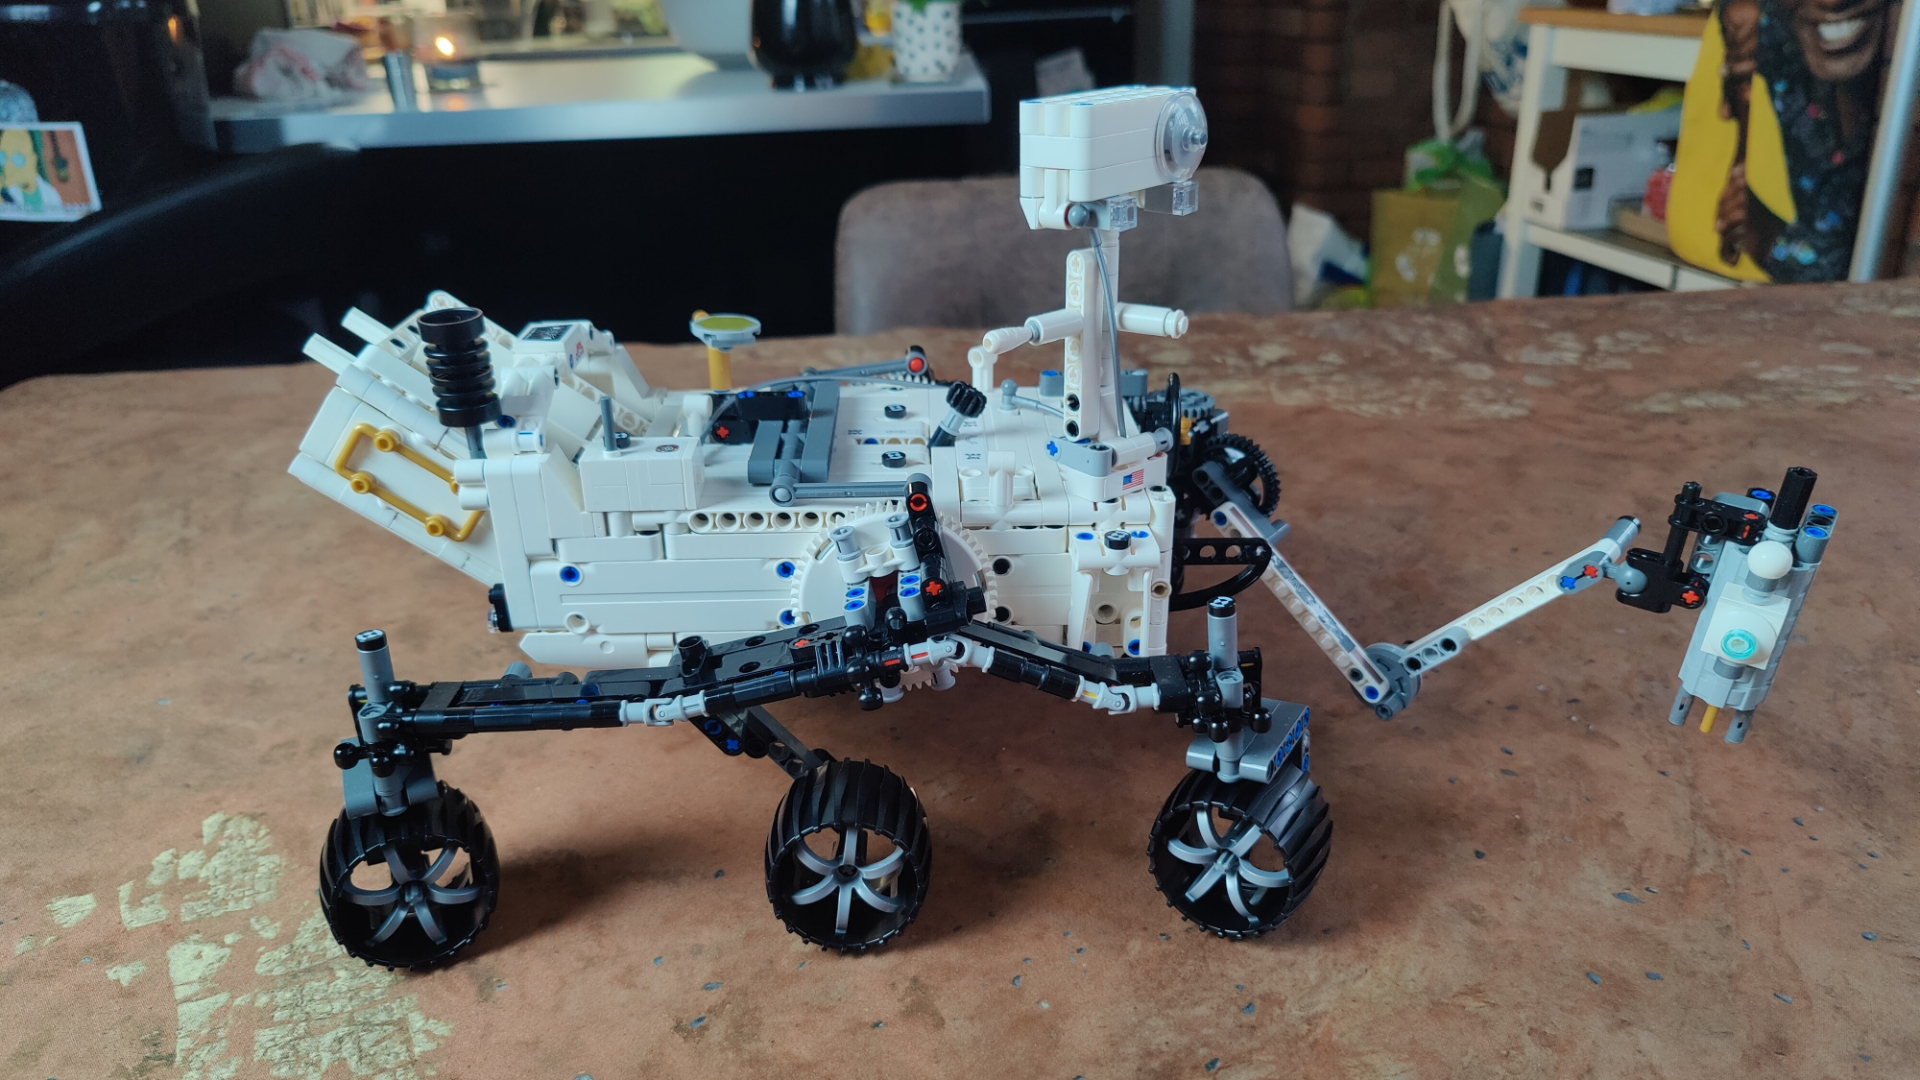 Close up photo of the Lego NASA Mars Rover Perseverance.